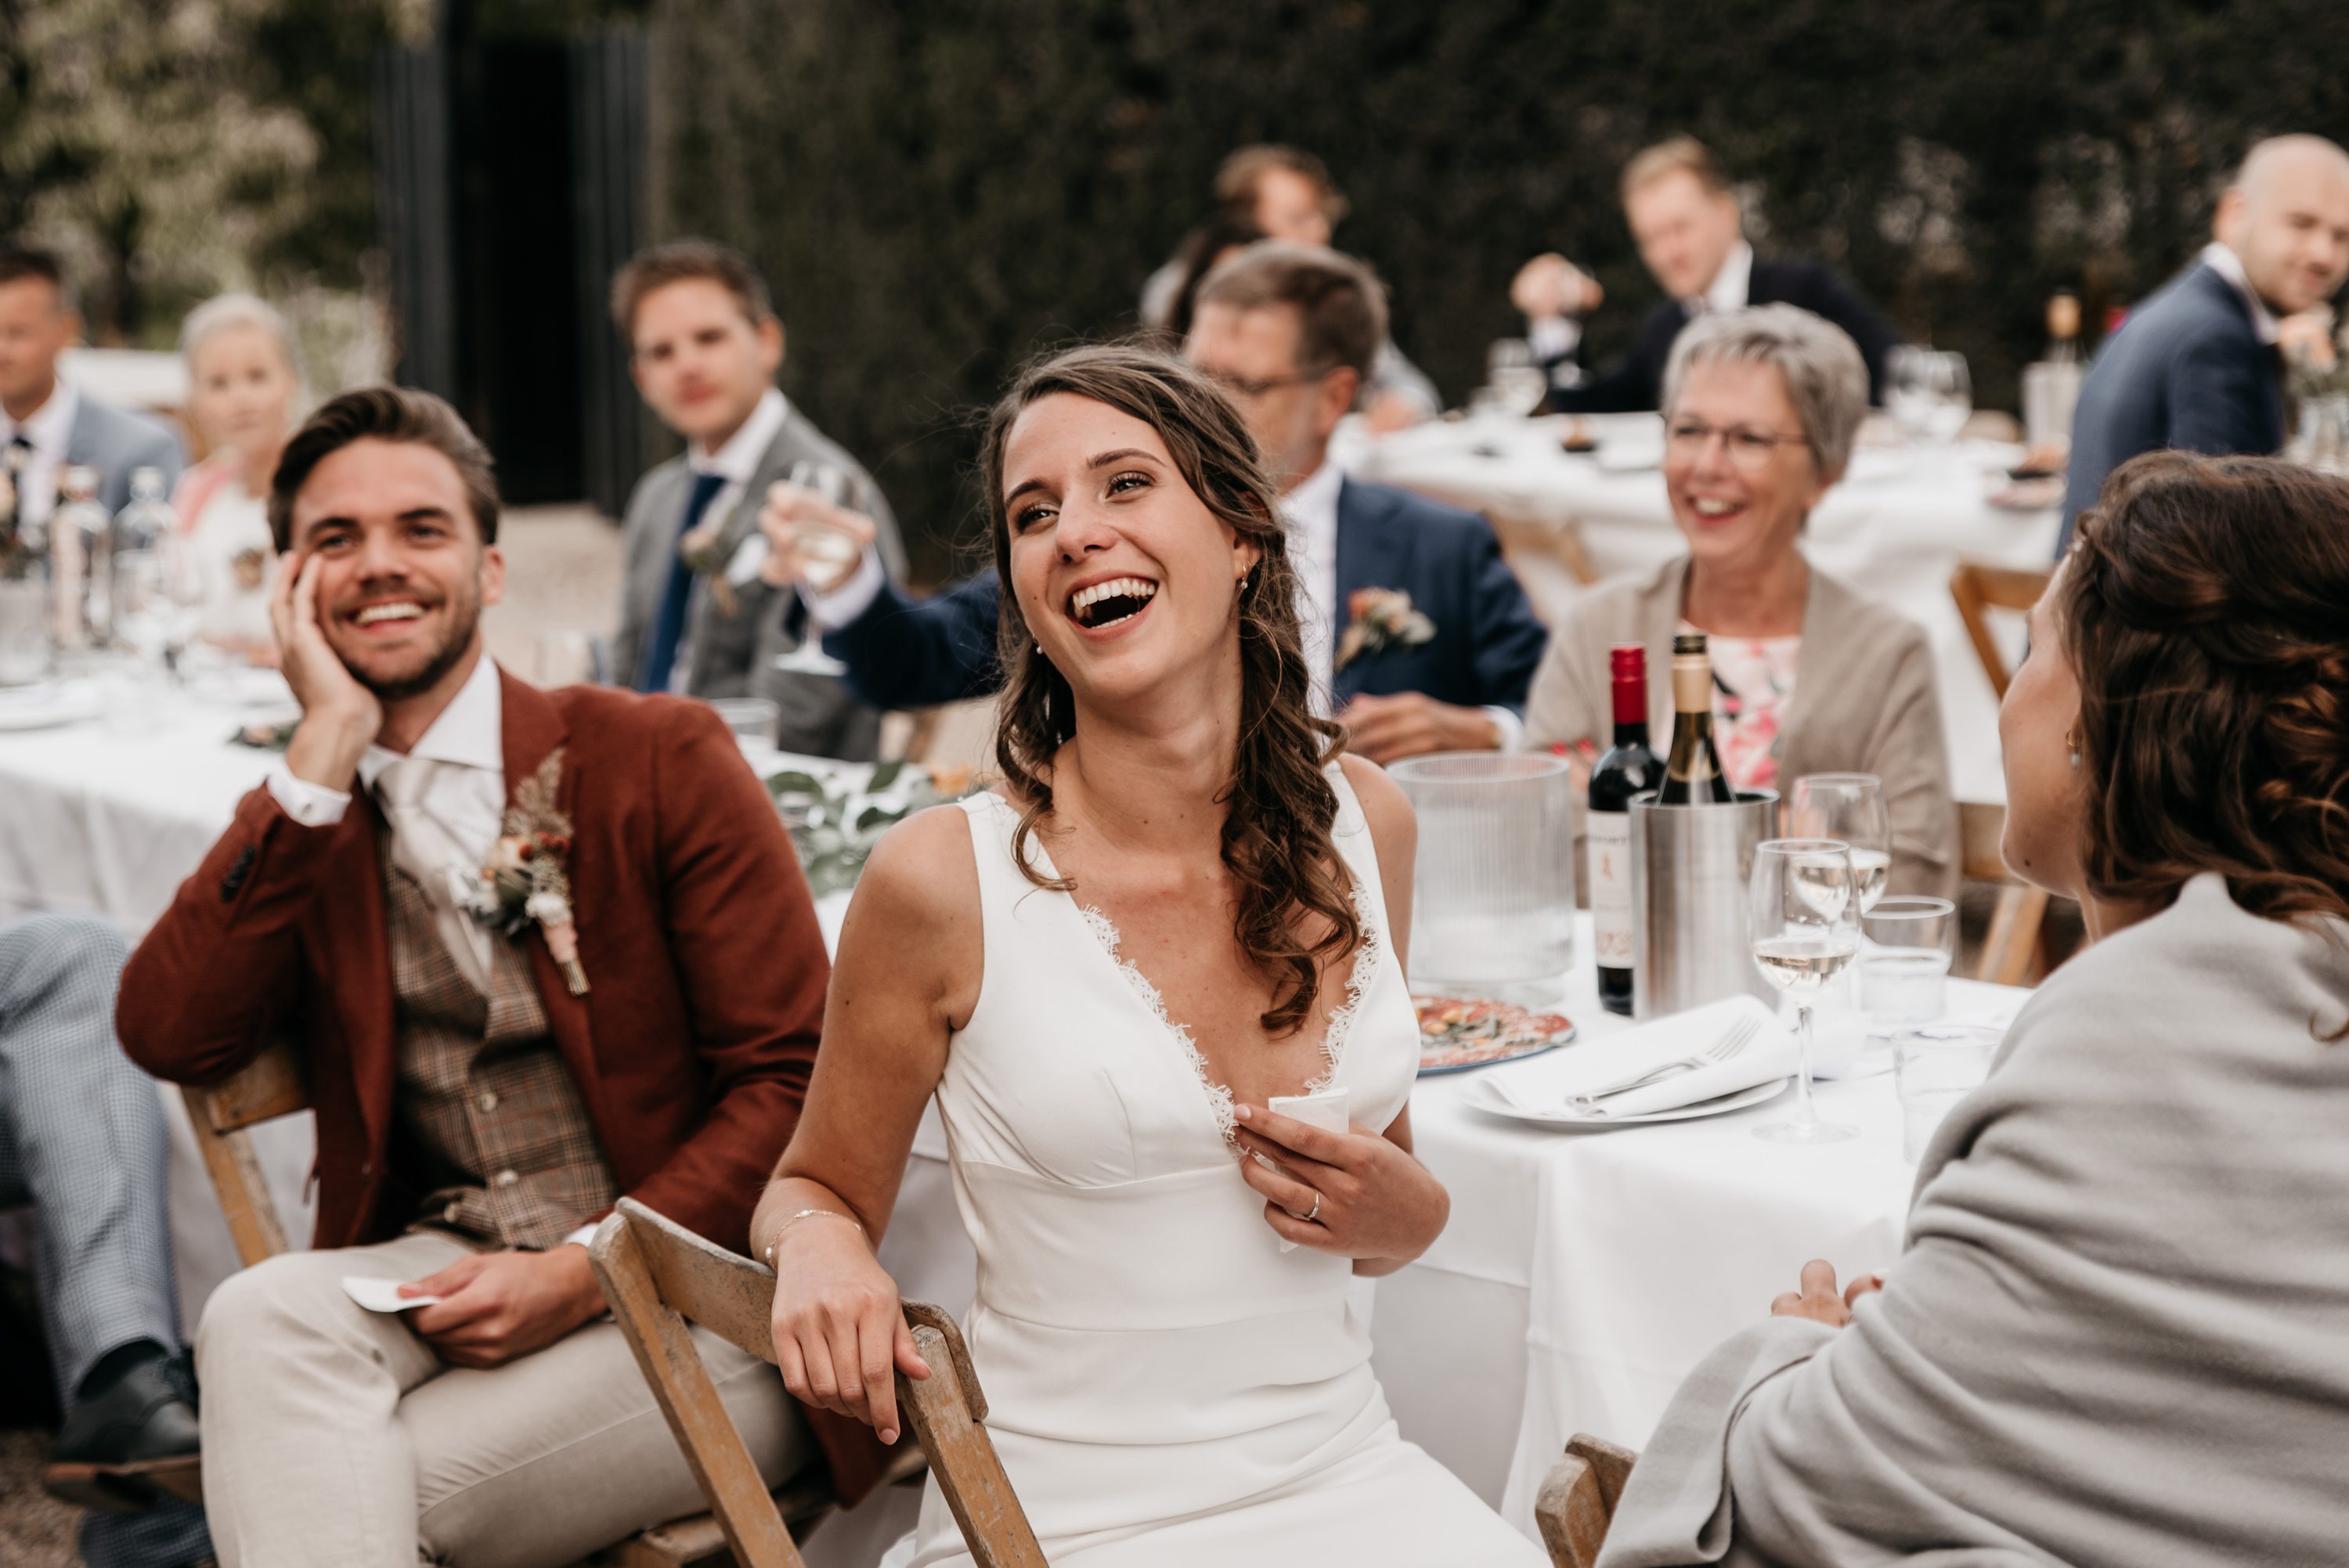 slot-doddendael-bruiloft-trouwfotograaf-louise-boonstoppel